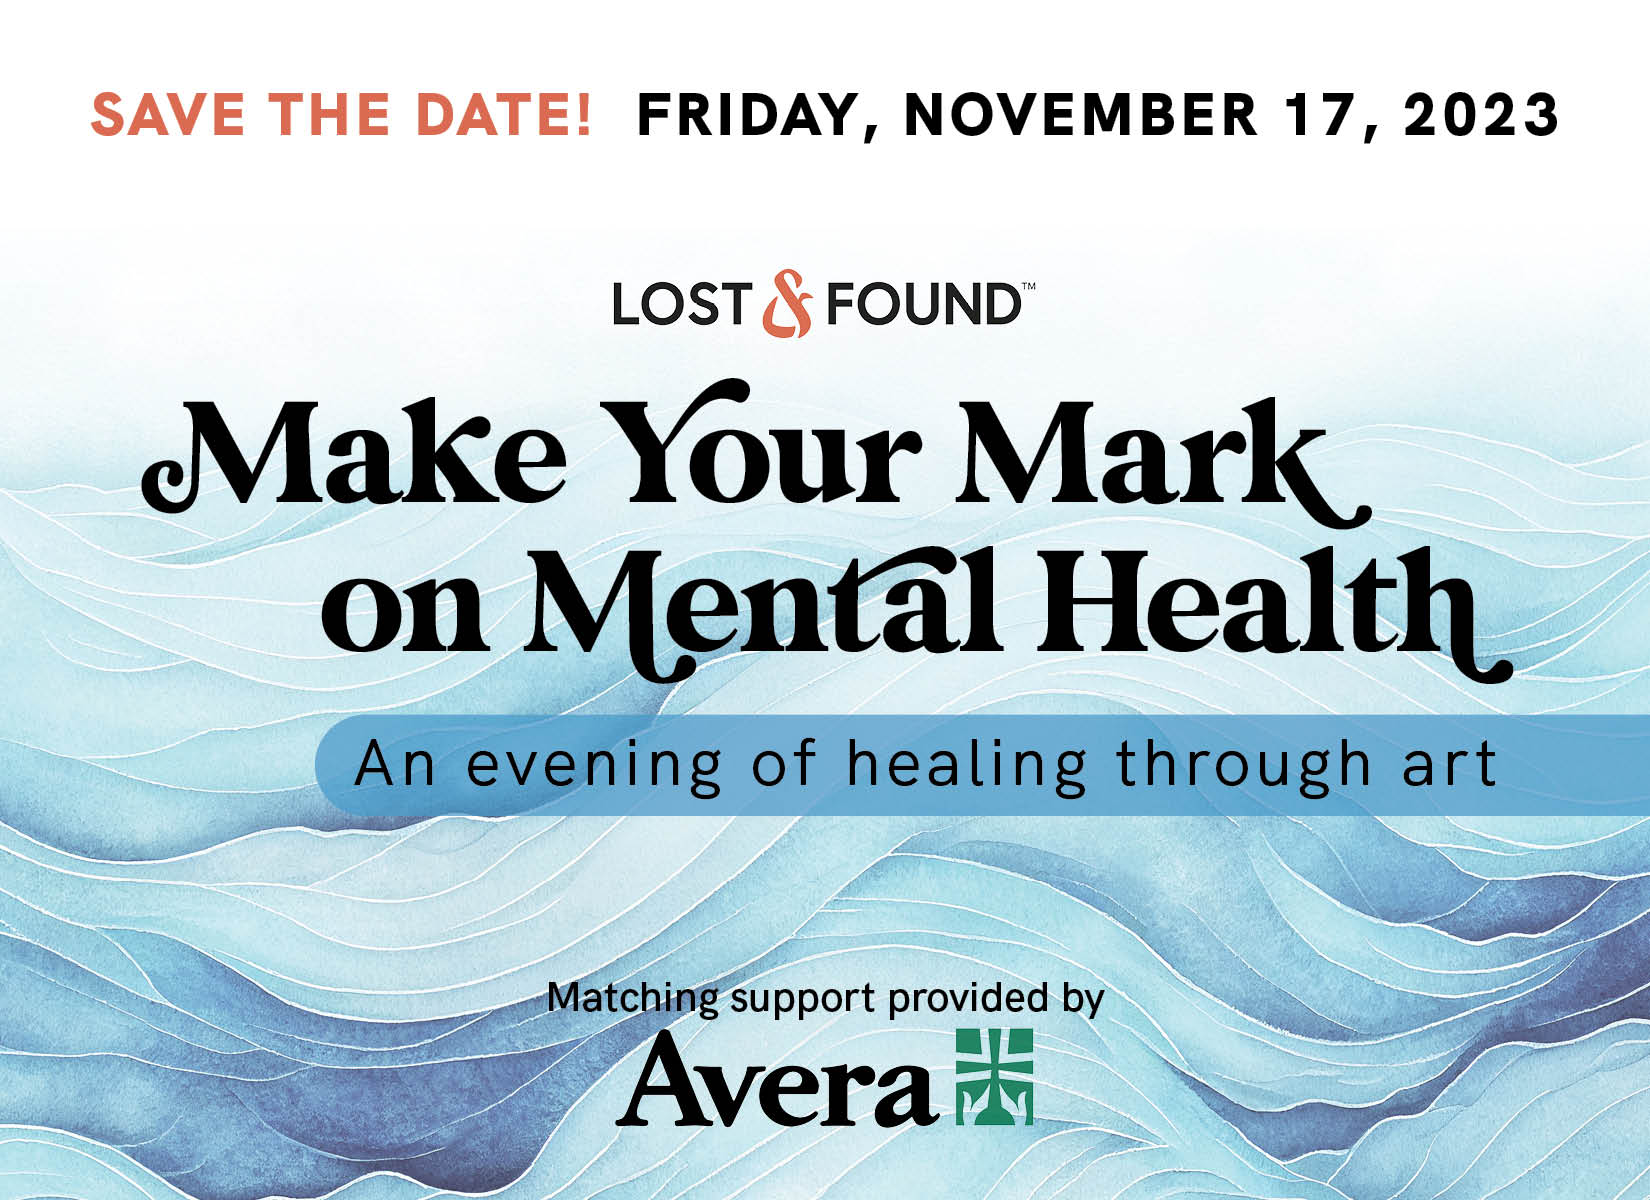 Make Your Mark on Mental Health: An evening of healing through art. November 17, 2023